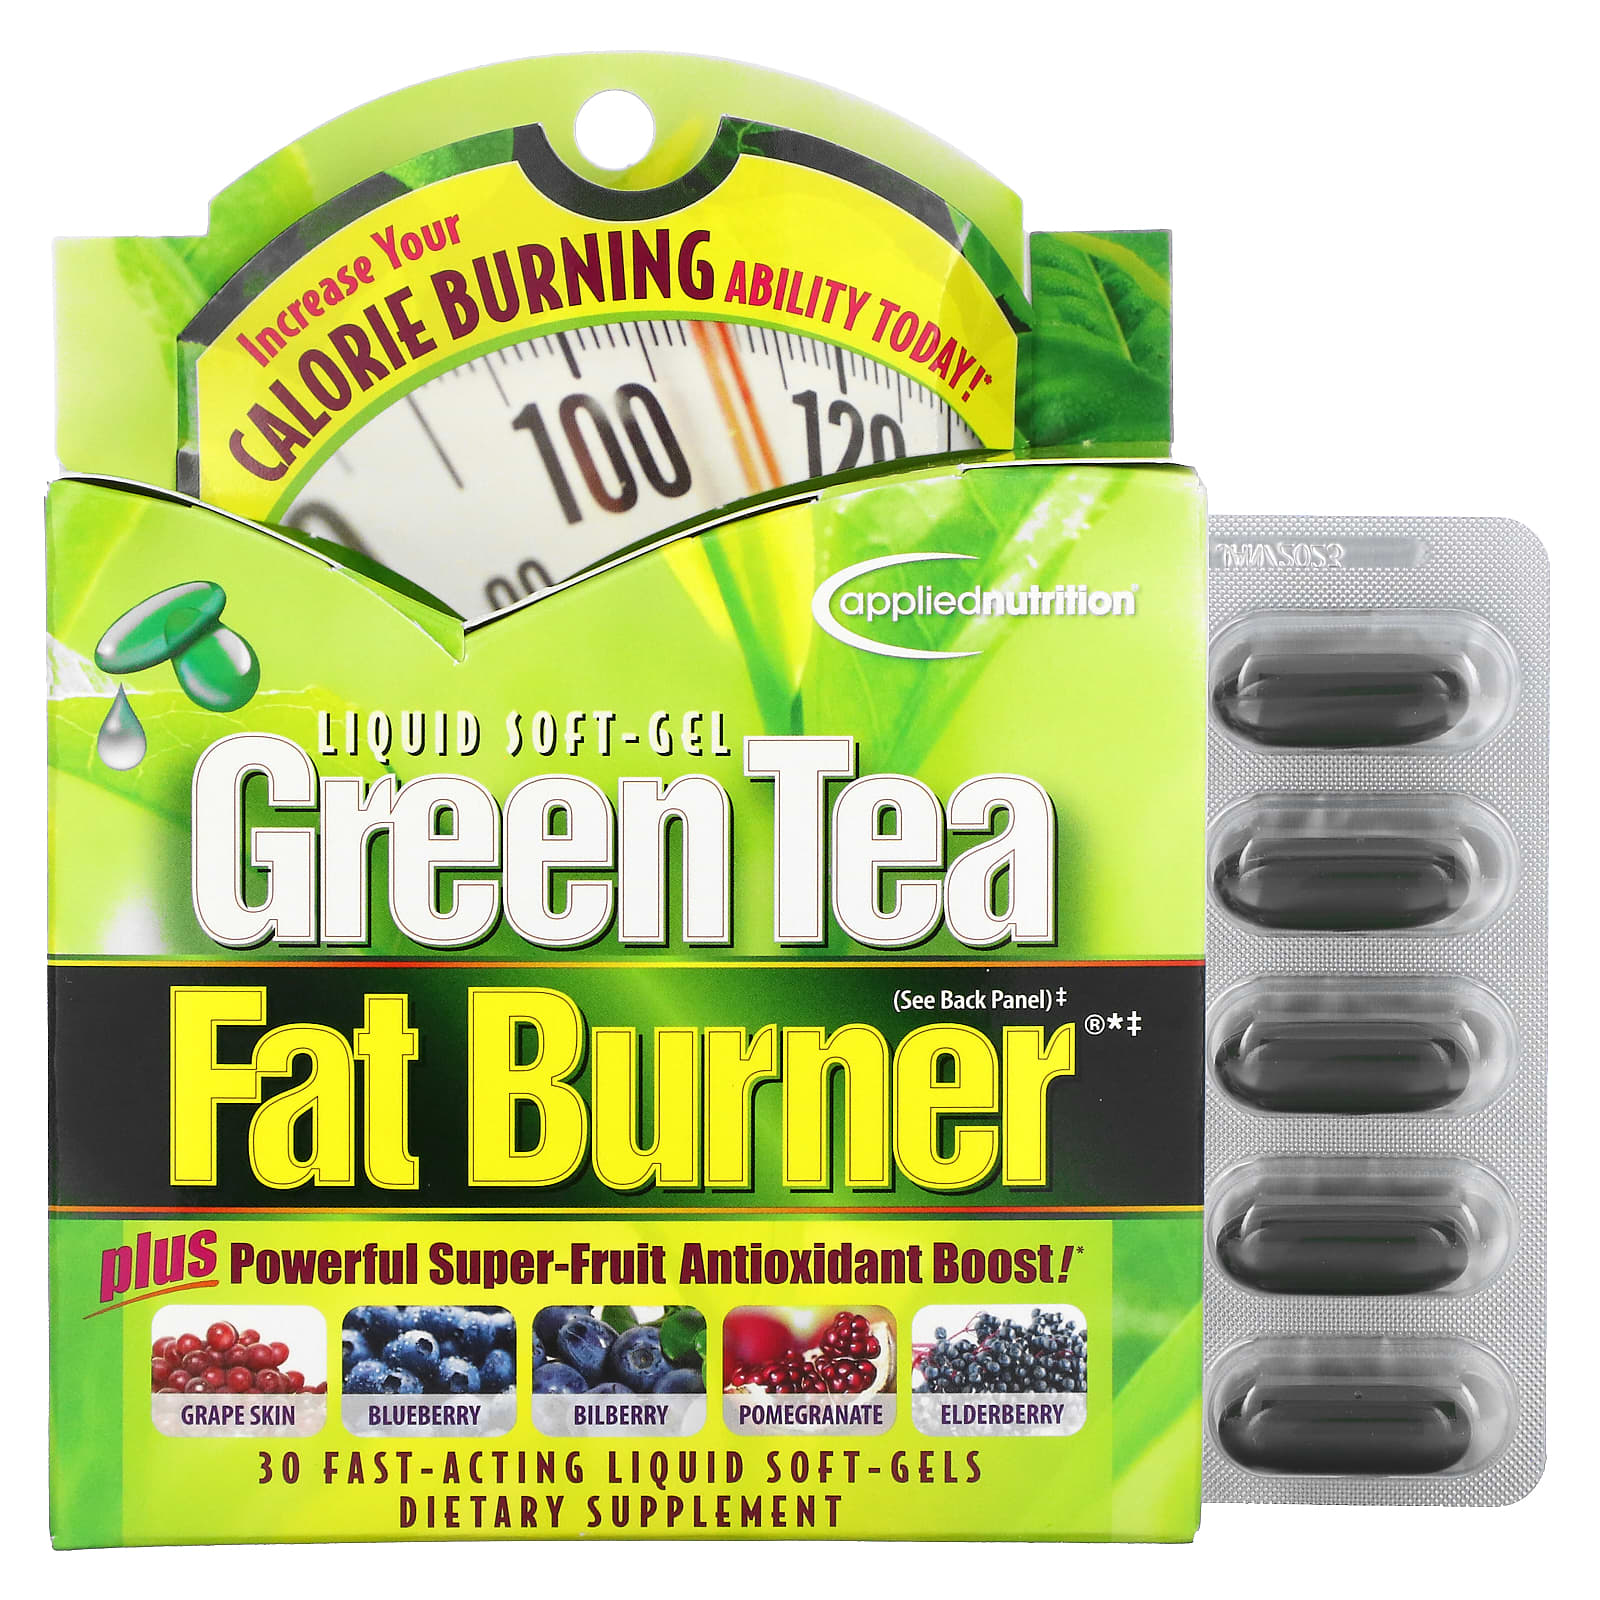 Applied nutrition green tea fat burner capsules - 30 fat burn soft gels